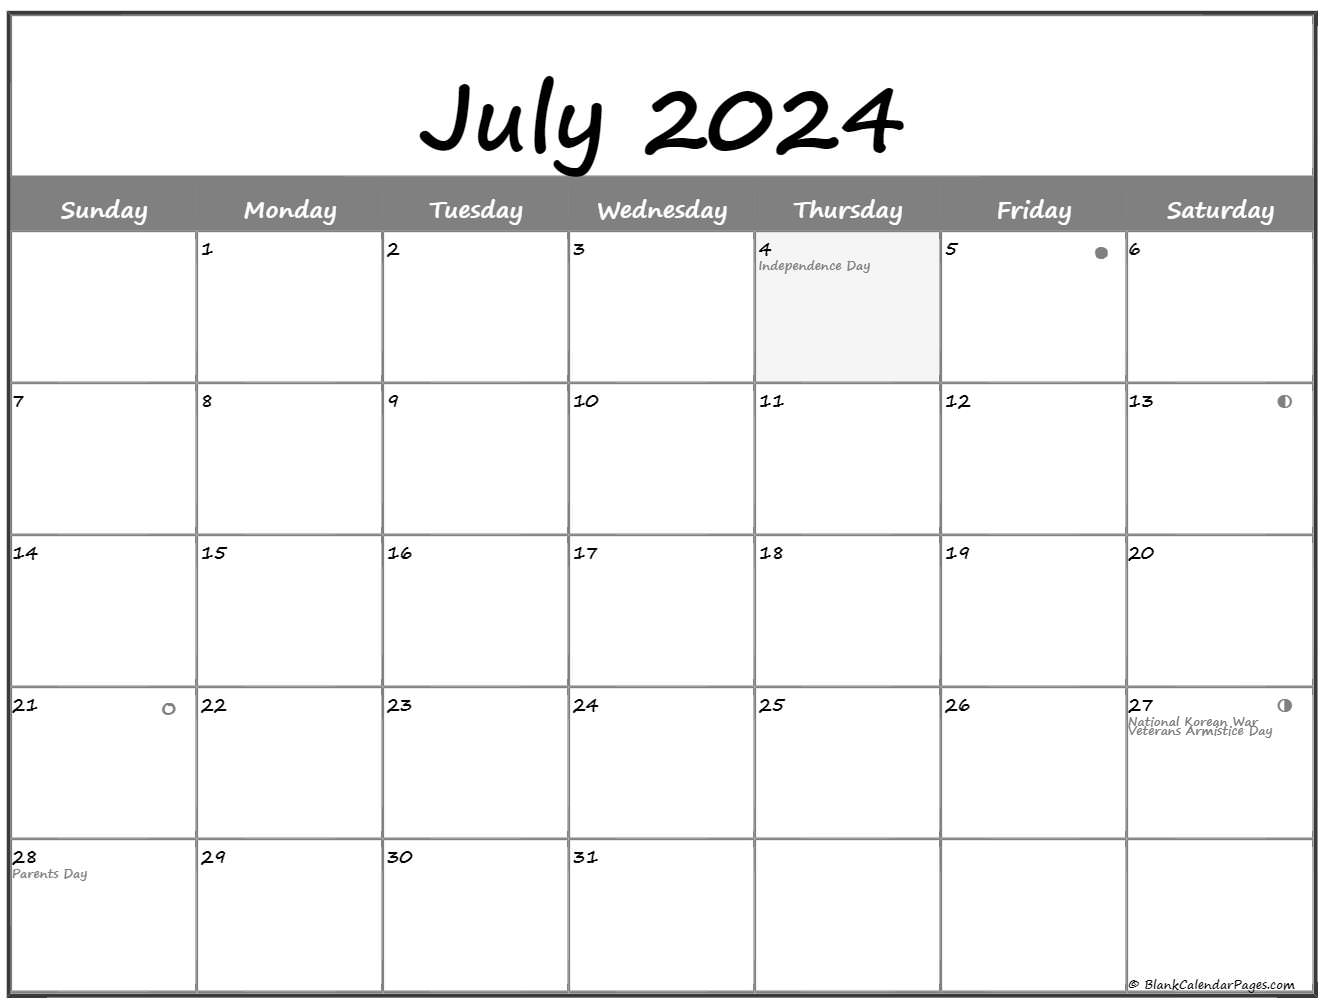 Moon Phases Calendar October 2022 July 2022 Lunar Calendar | Moon Phase Calendar